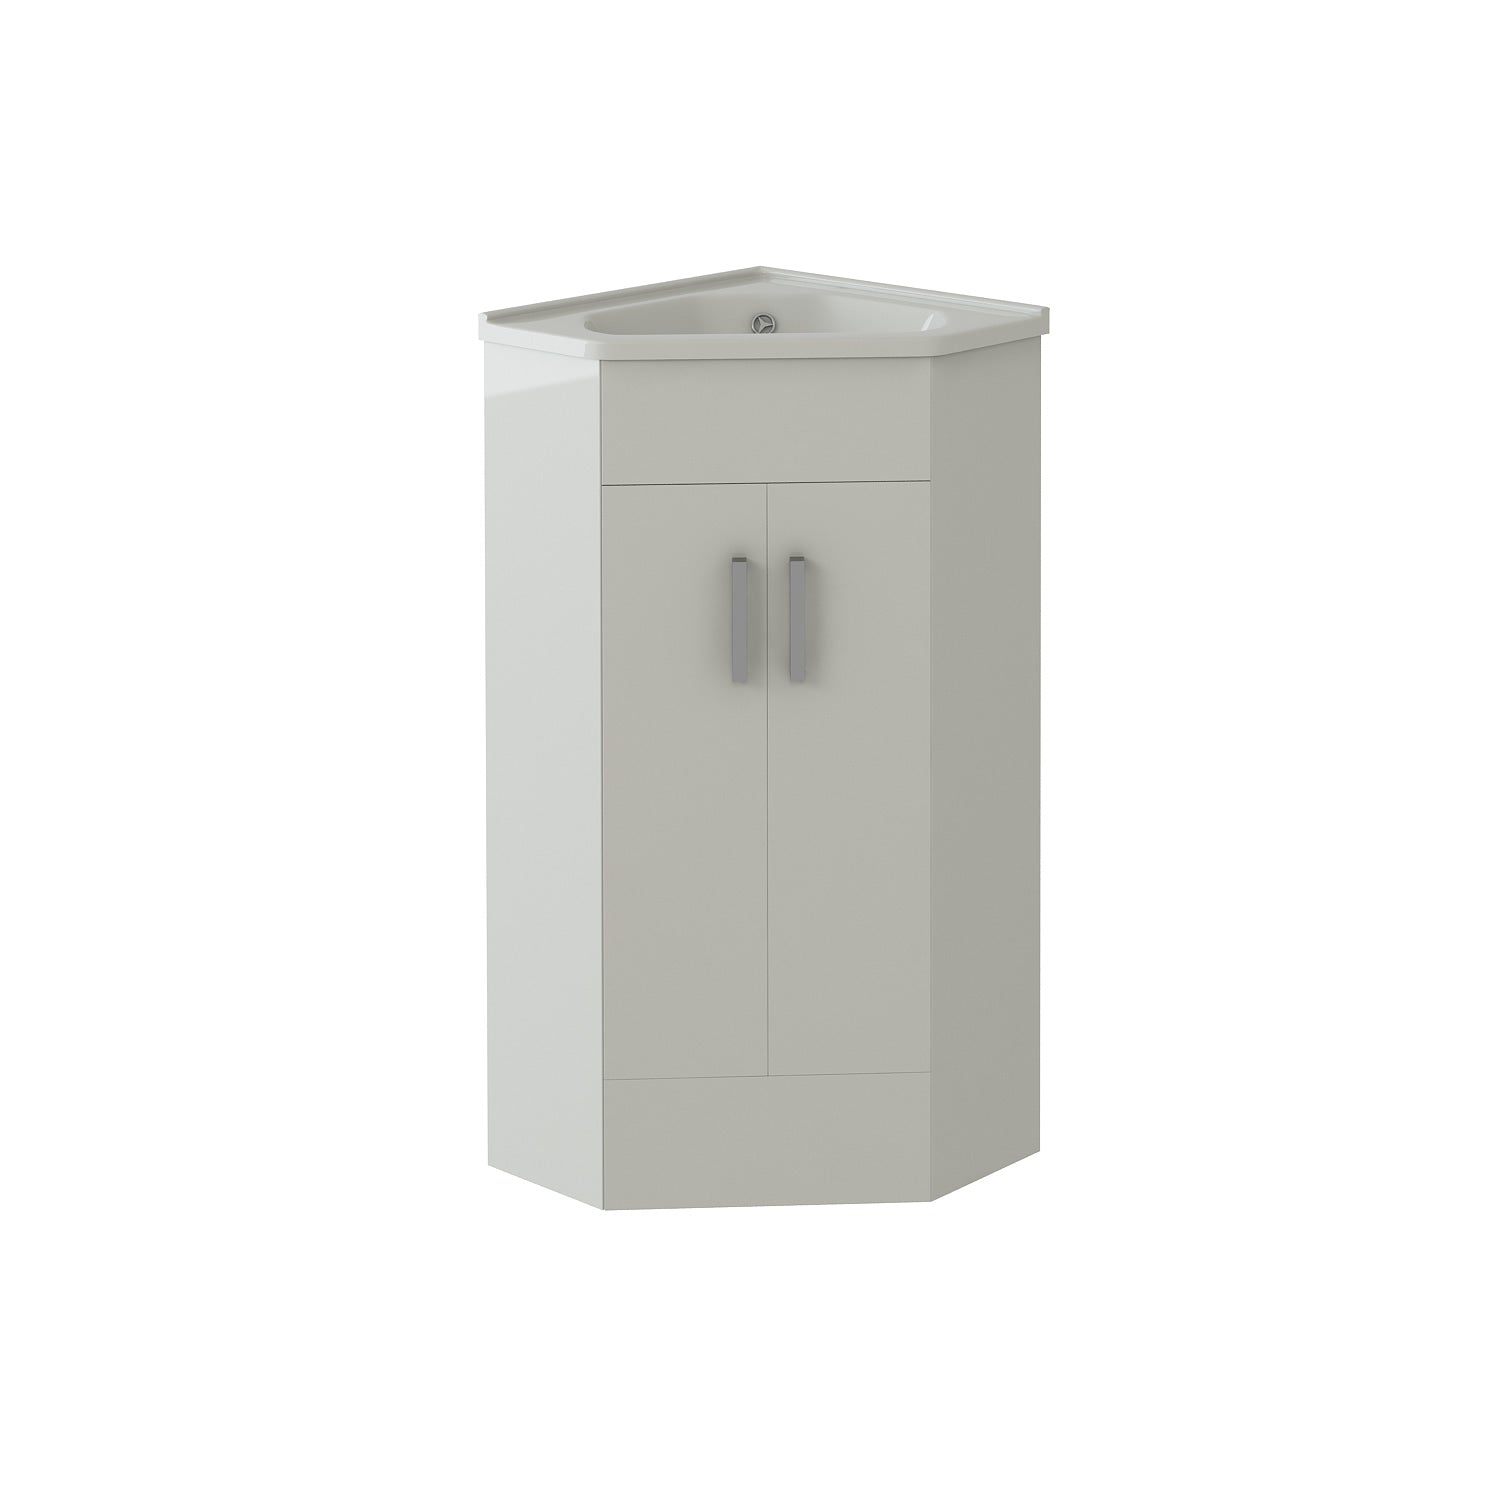 Krona Corner Cloakroom Vanity Unit and basin - 400mm Wide, compact design, space-saving solution for modern UK bathrooms.